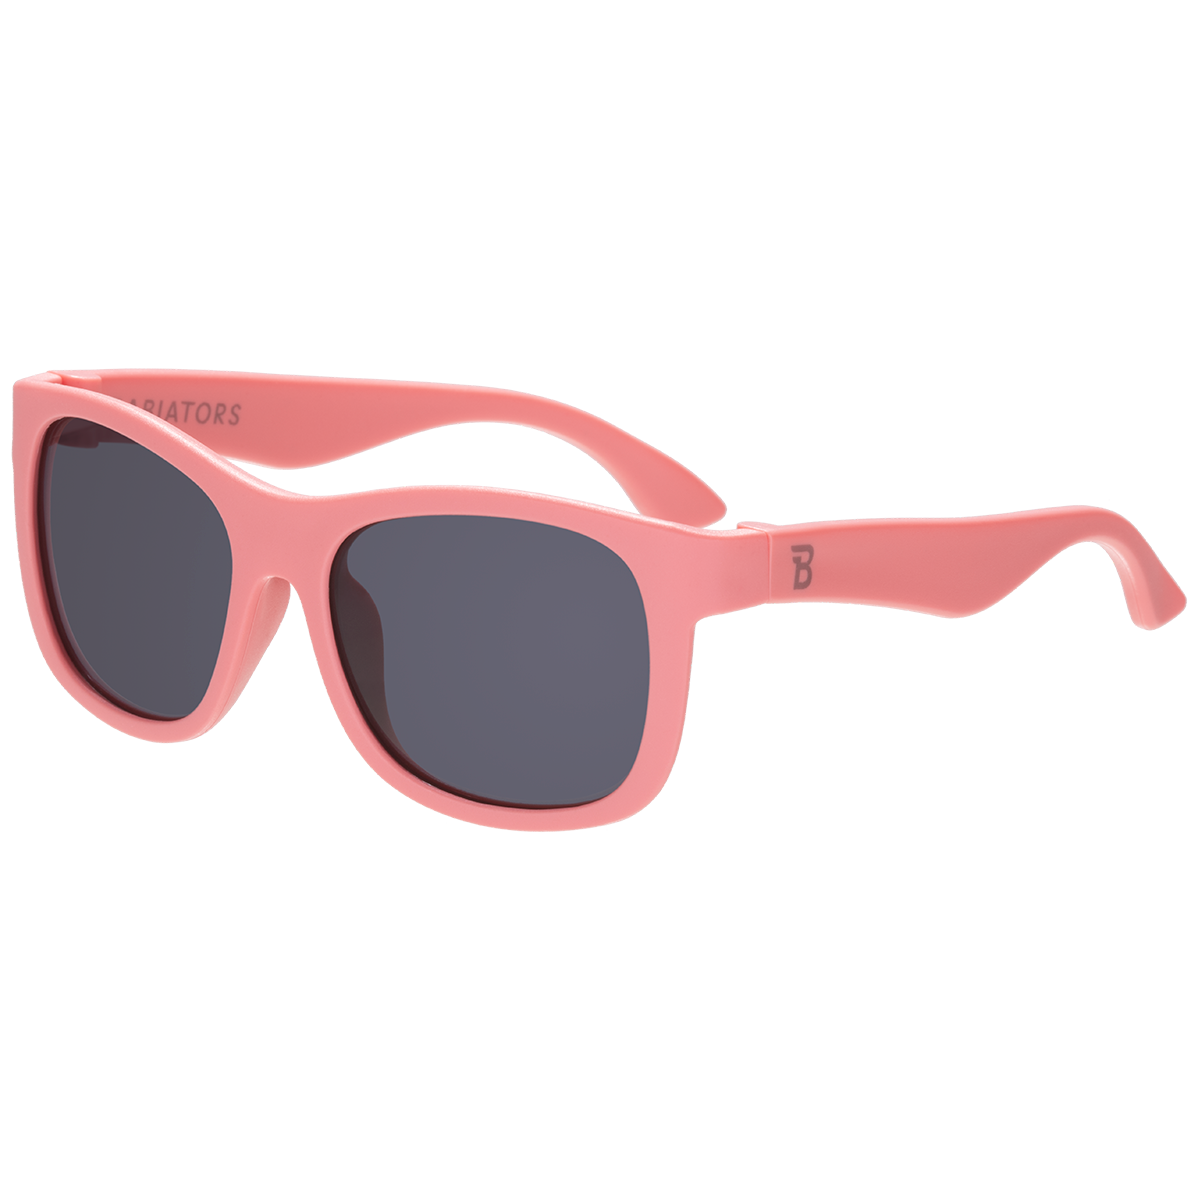 Babiators - Navigator Sunglasses in Seashell Pink: Ages 3-5